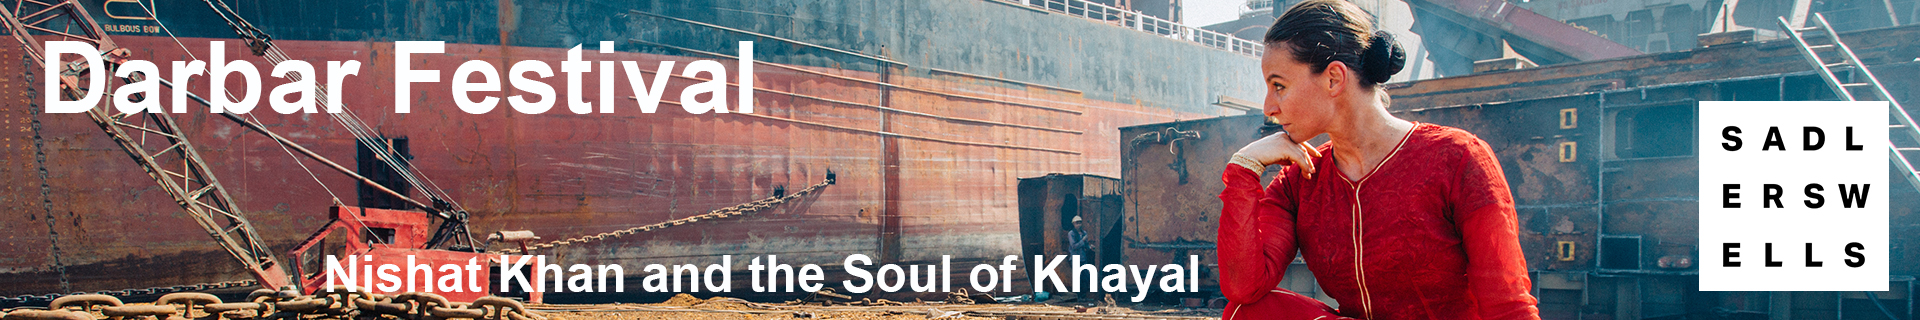 Nishat Khan and the Soul of Khayal - Darbar Festival 2017 Header Image
